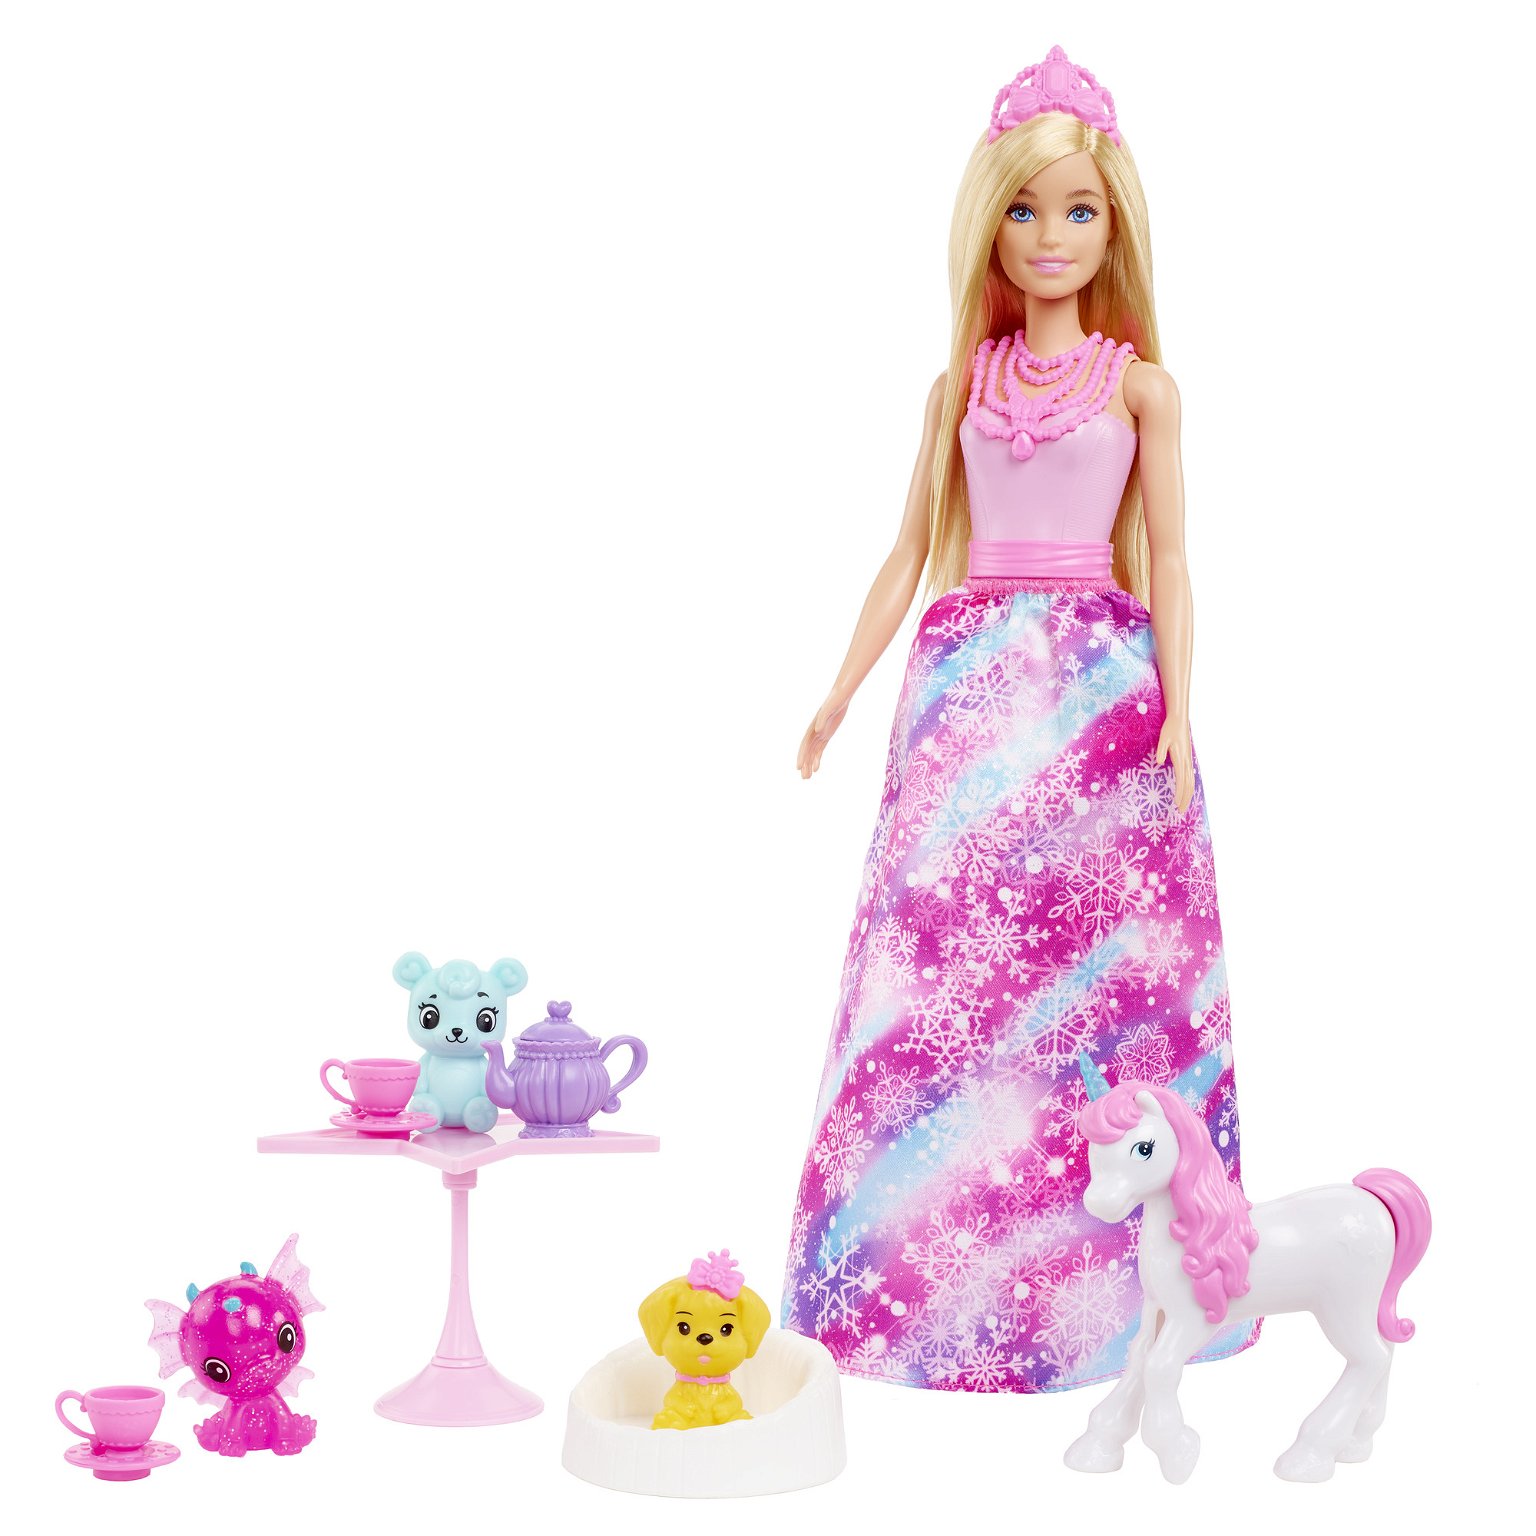 Barbie Dreamtopia advento kalendorius - 4